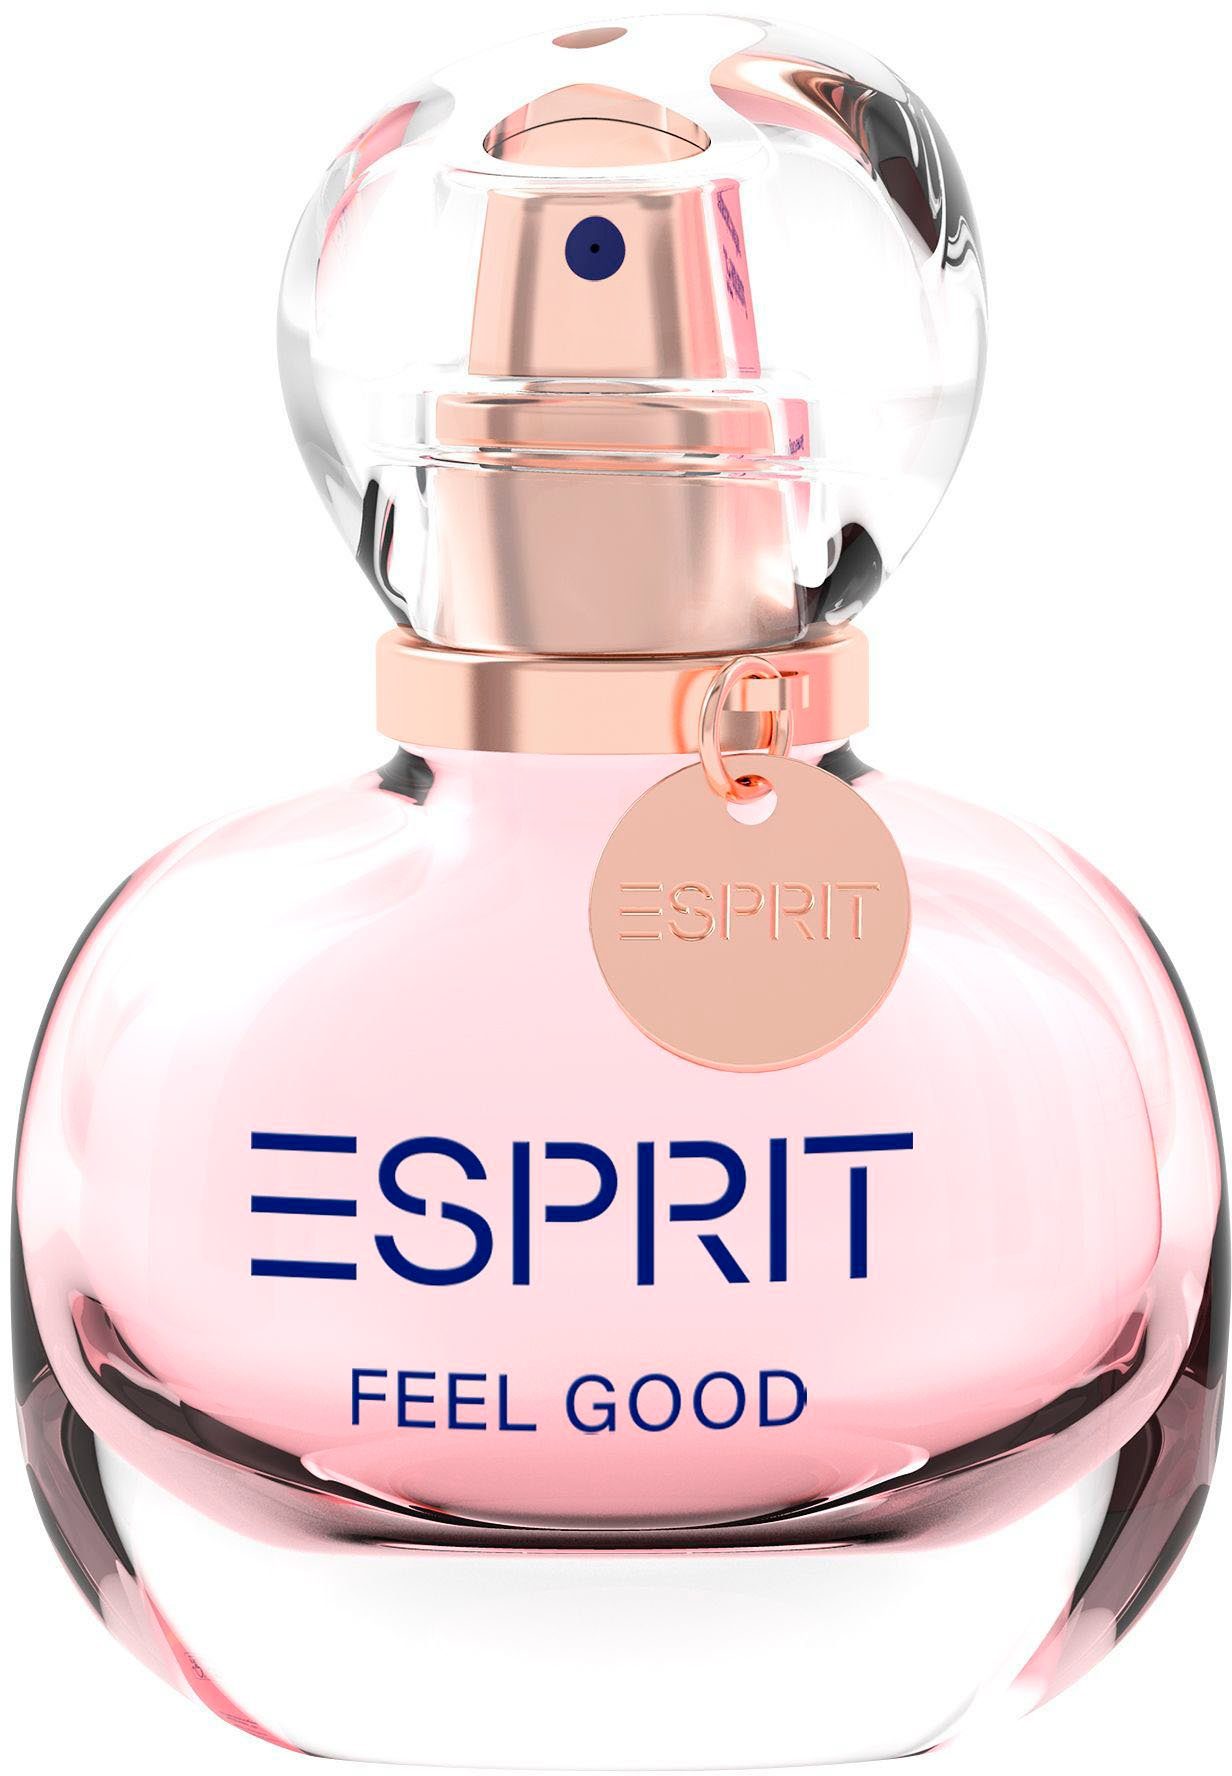 FEEL ml Esprit her de Parfum for EdP Eau 20 GOOD